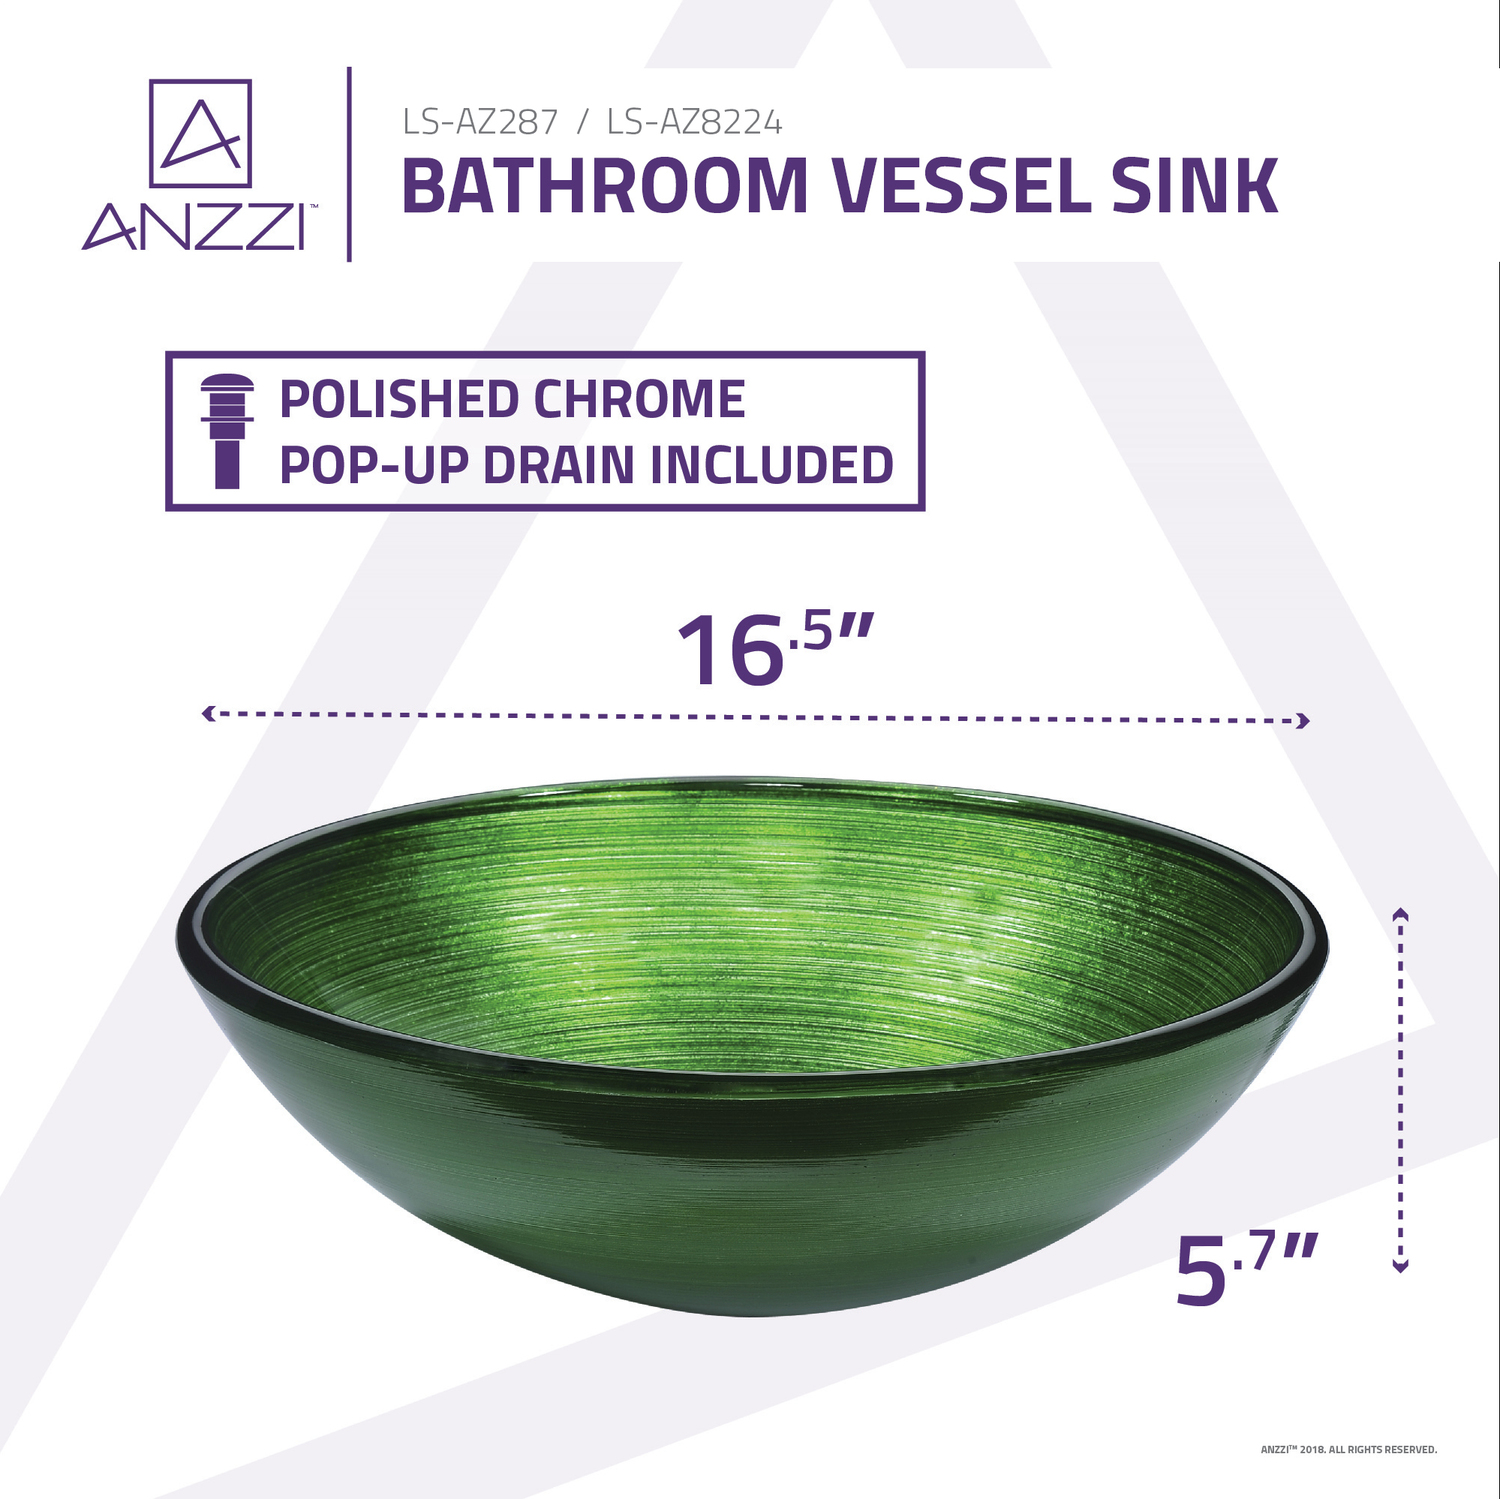 custom vanity tops with sink Anzzi BATHROOM - Sinks - Vessel - Tempered Glass Green